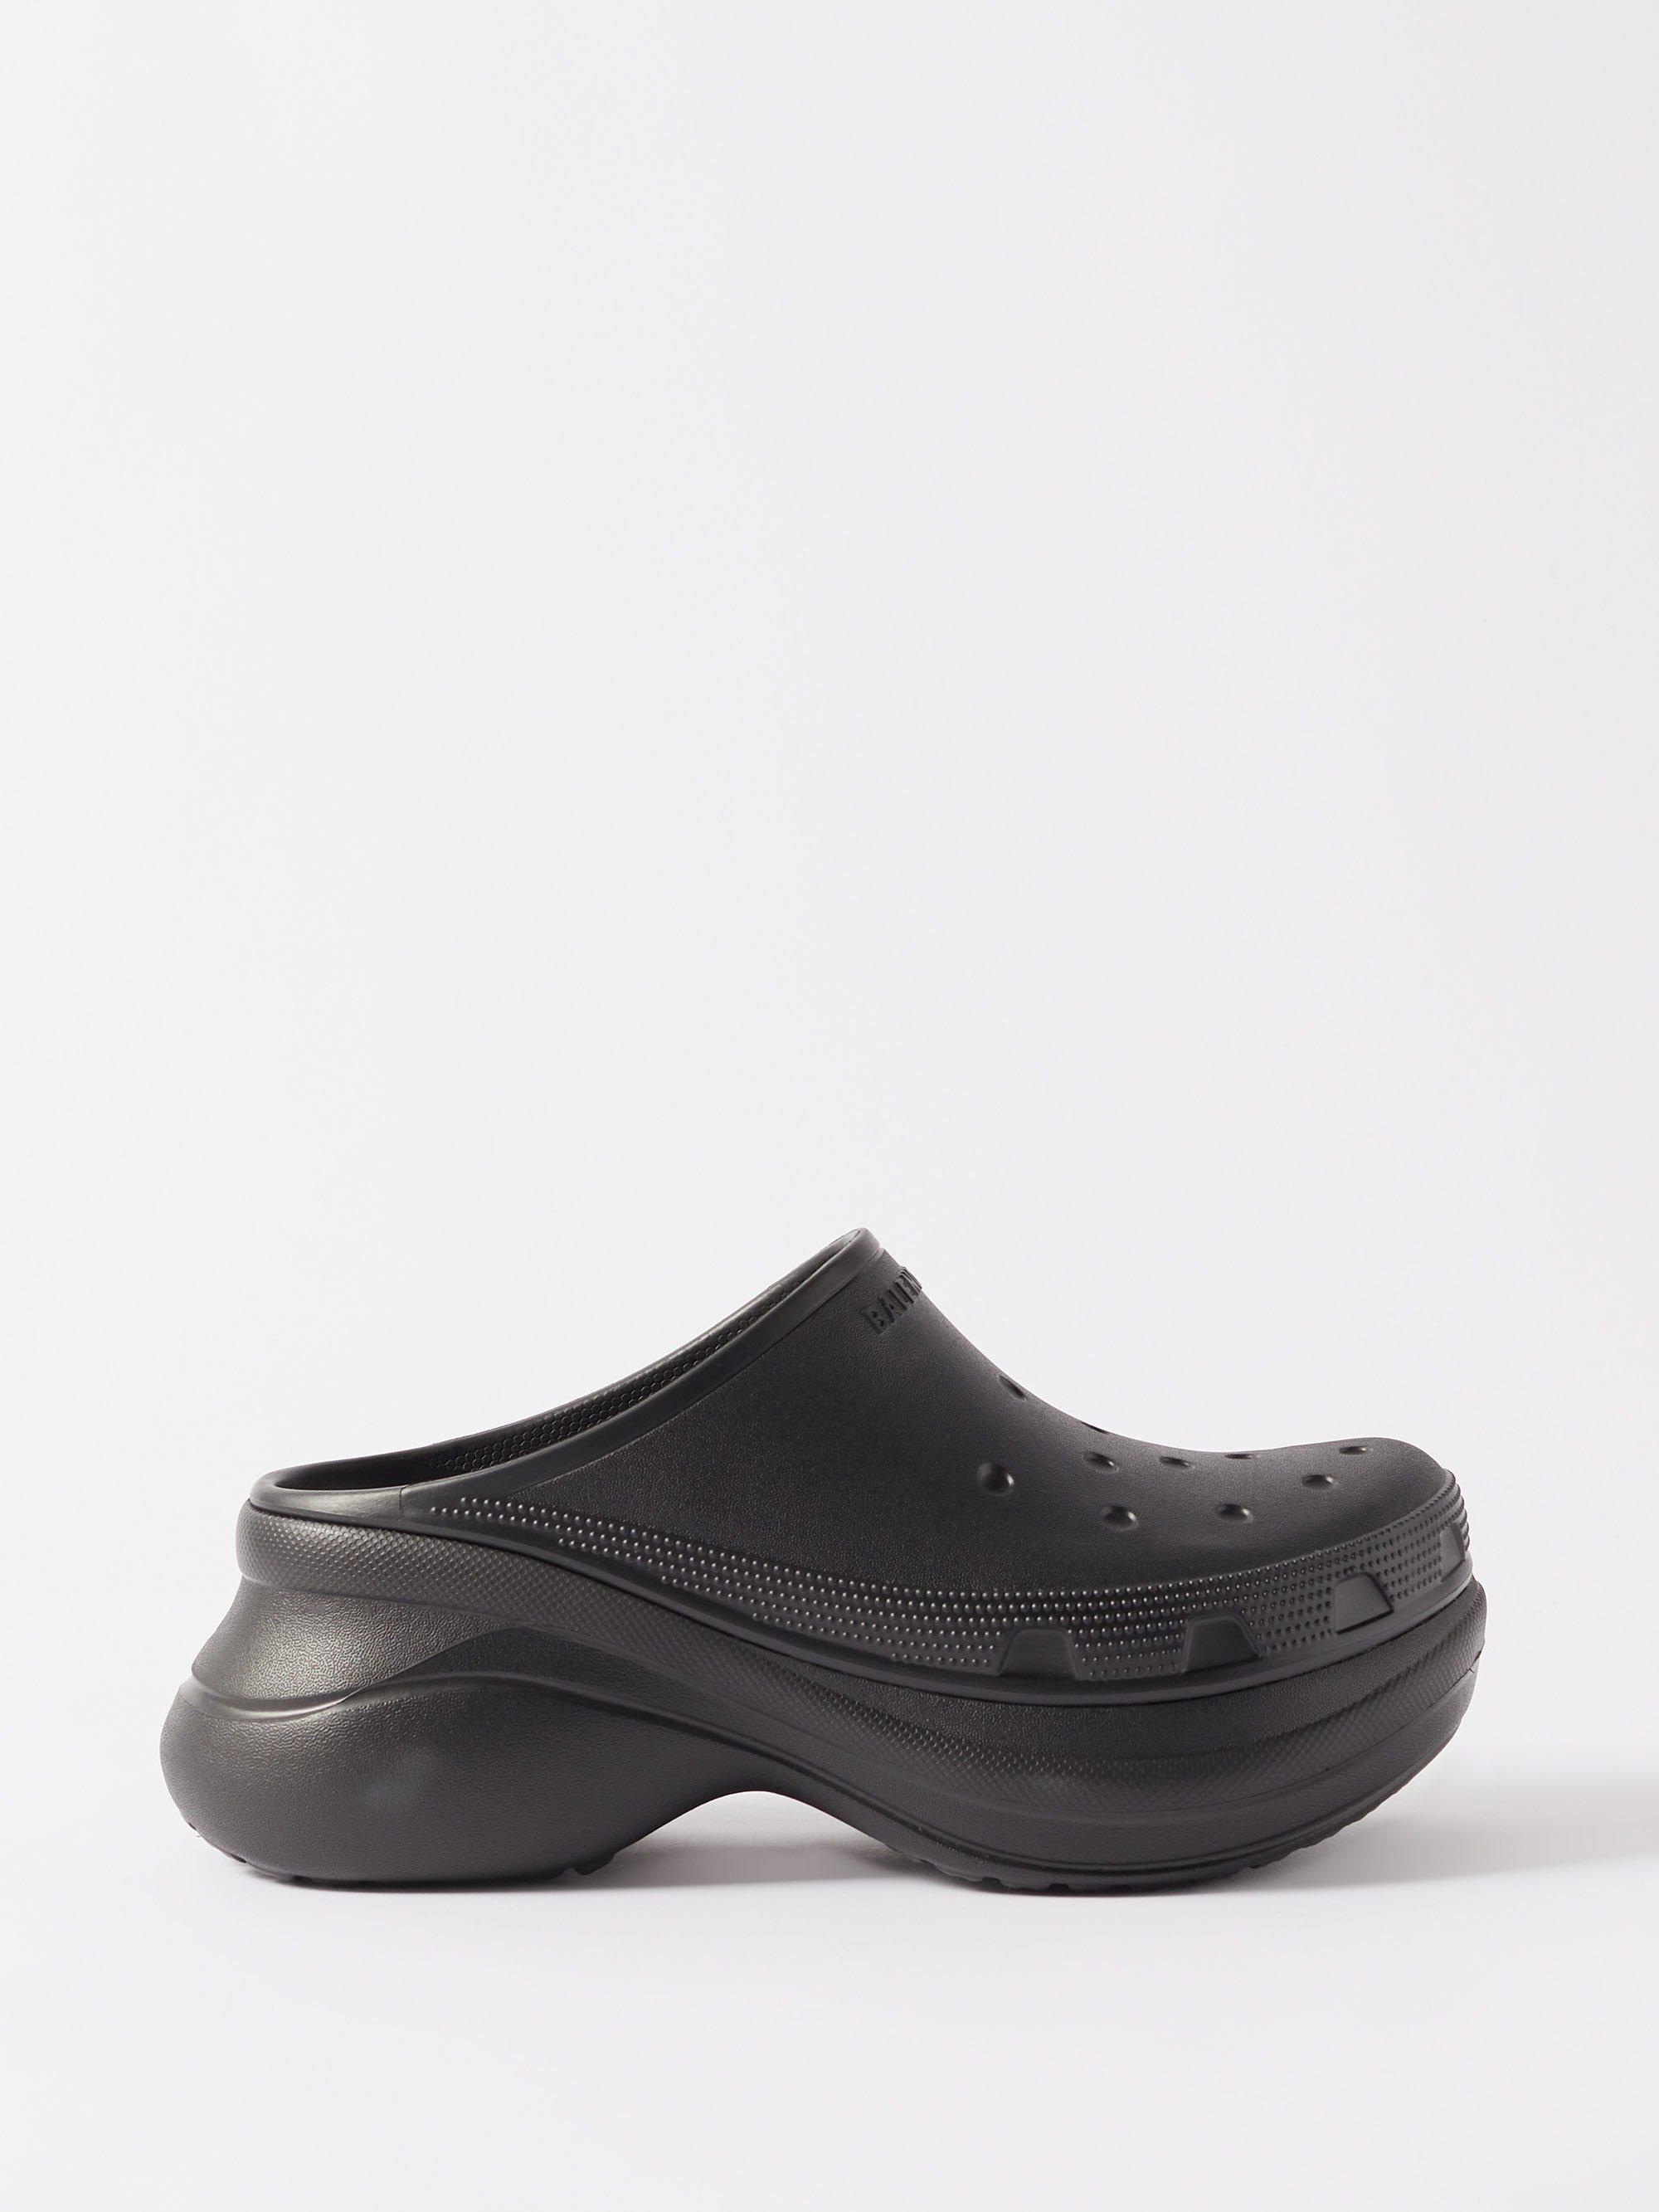 Balenciaga X Crocs 5 Platform Rubber Clogs in Black | Lyst